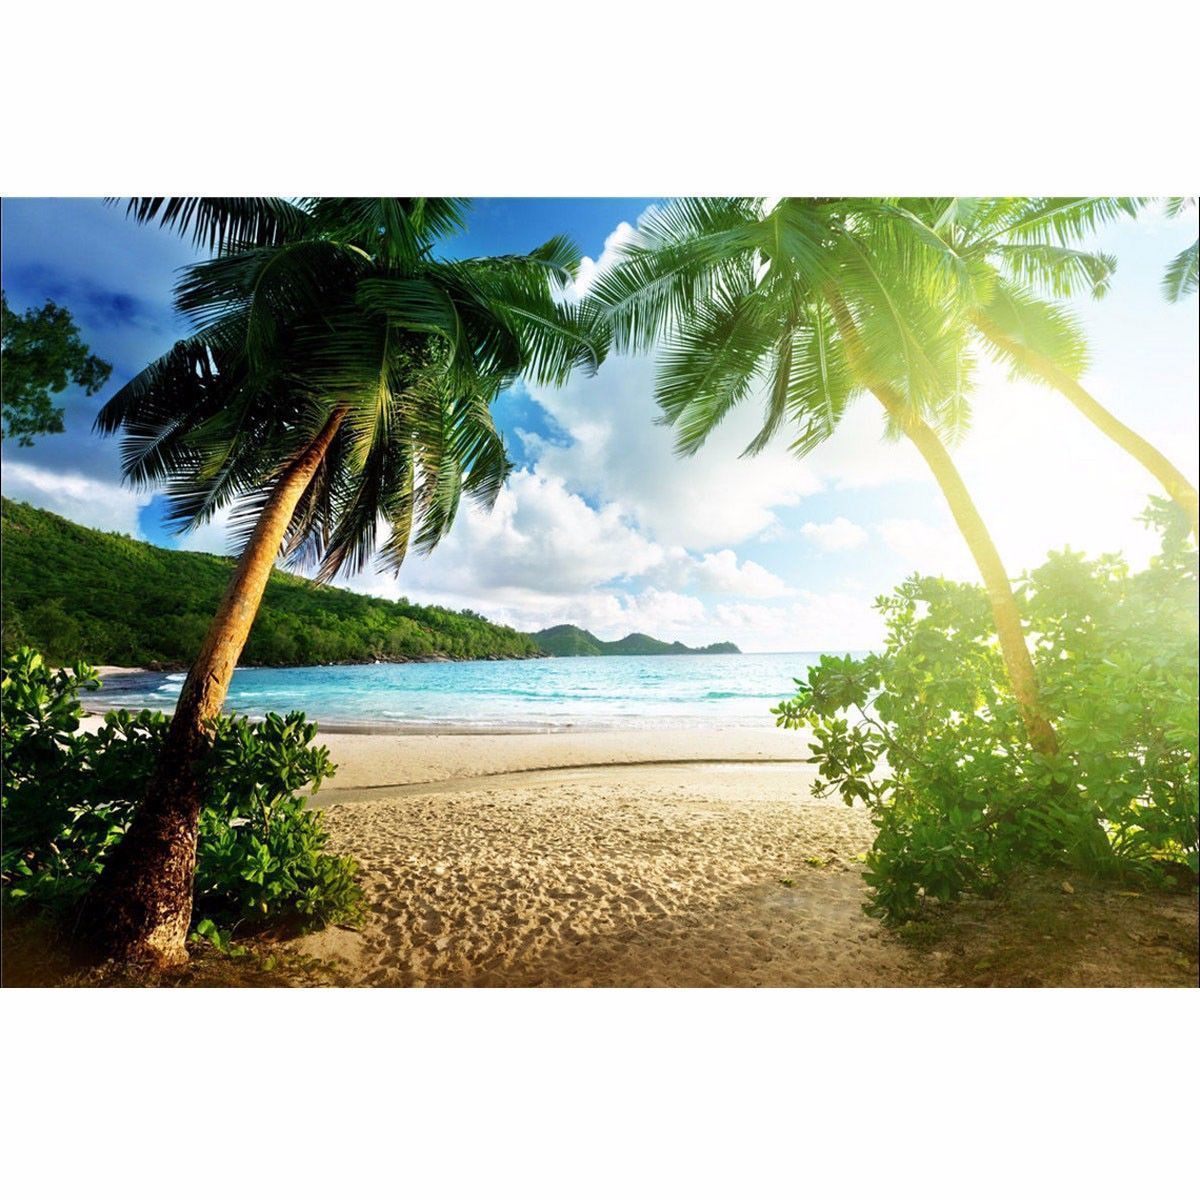 7x5ft-Seaside-Beach-Summer-Theme-Photography-Vinyl-Backdrop-Studio-Background-21m-x-15m-1169327